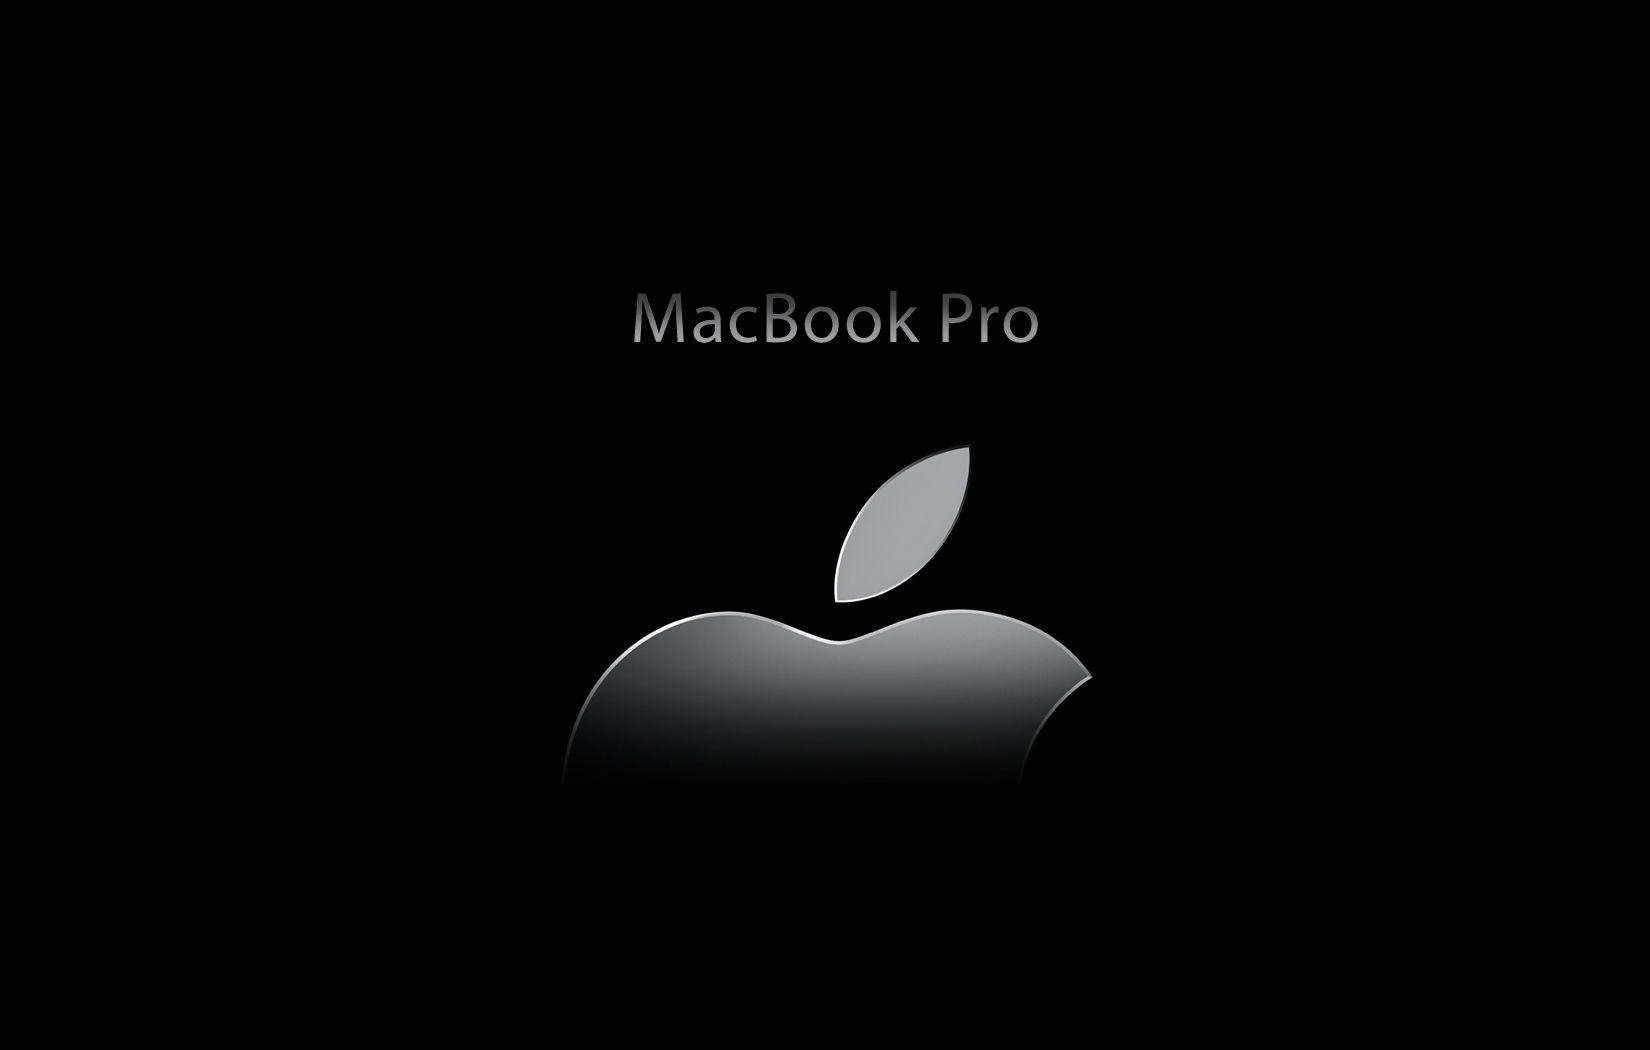 Macbook Wallpaper Hd: Full HD Wallpaper Macbook Pro. .Ssofc